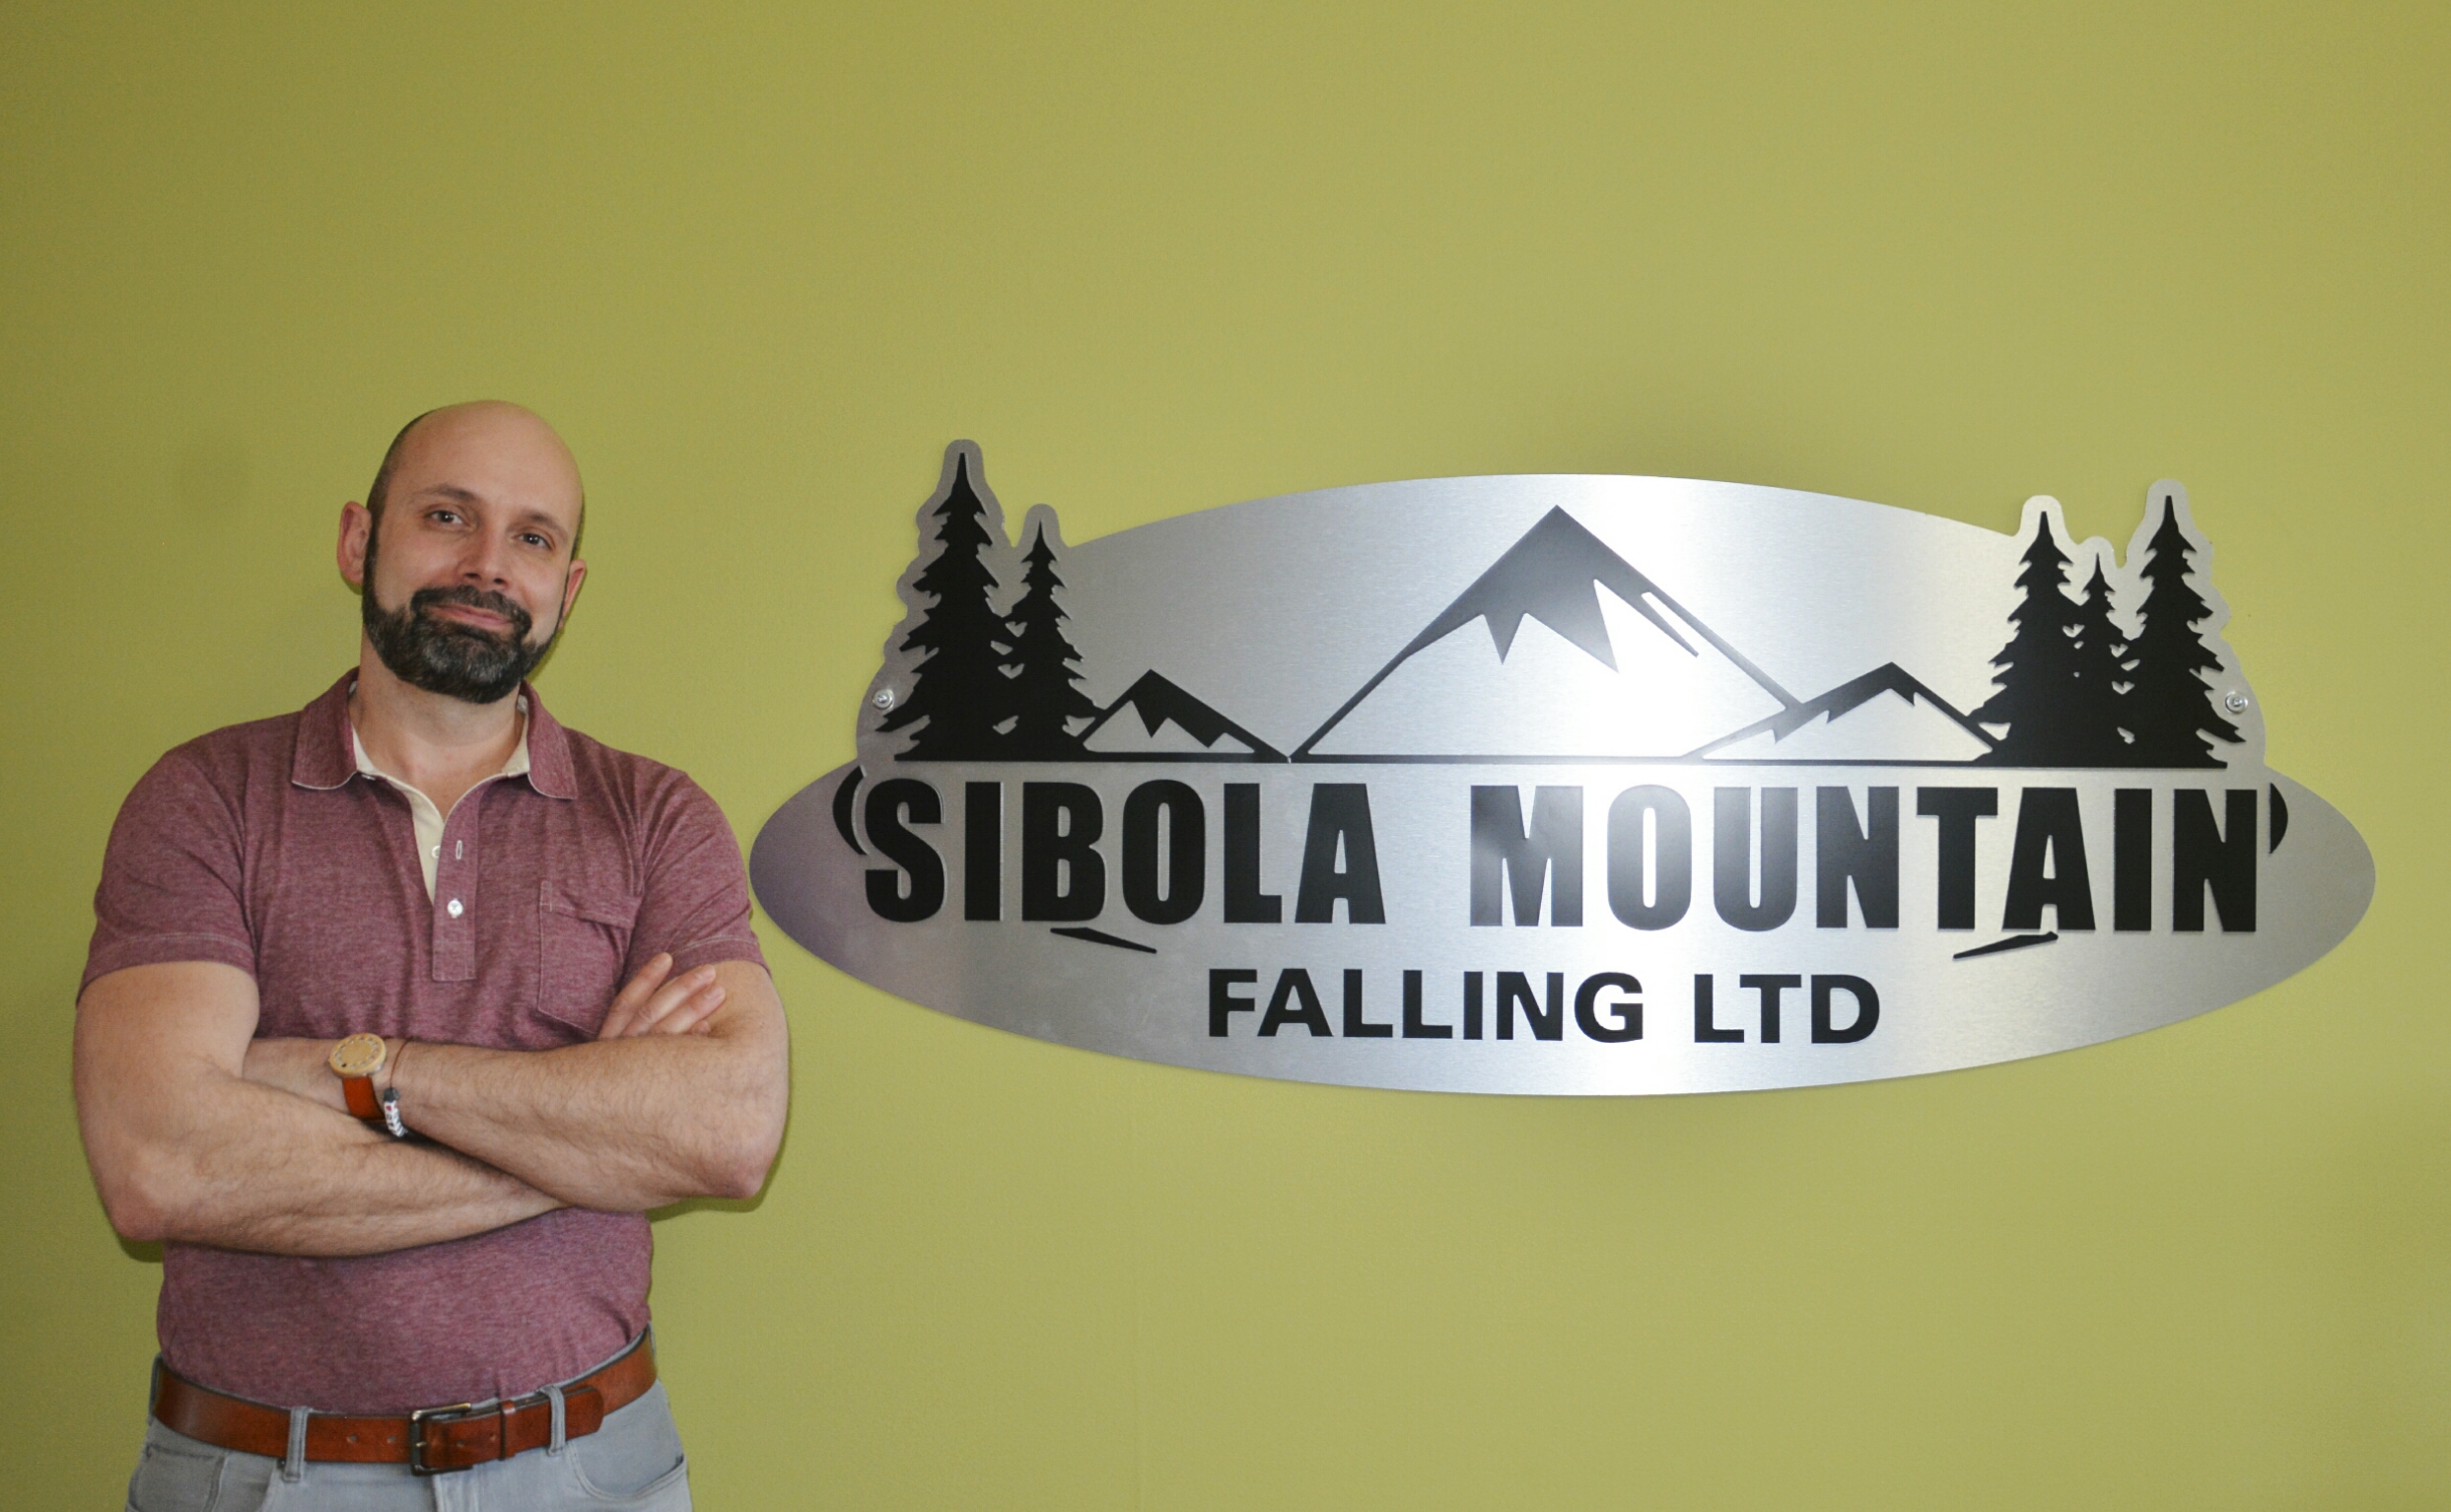 Jordan Nicolussi with Sibola Mountain Falling Ltd.